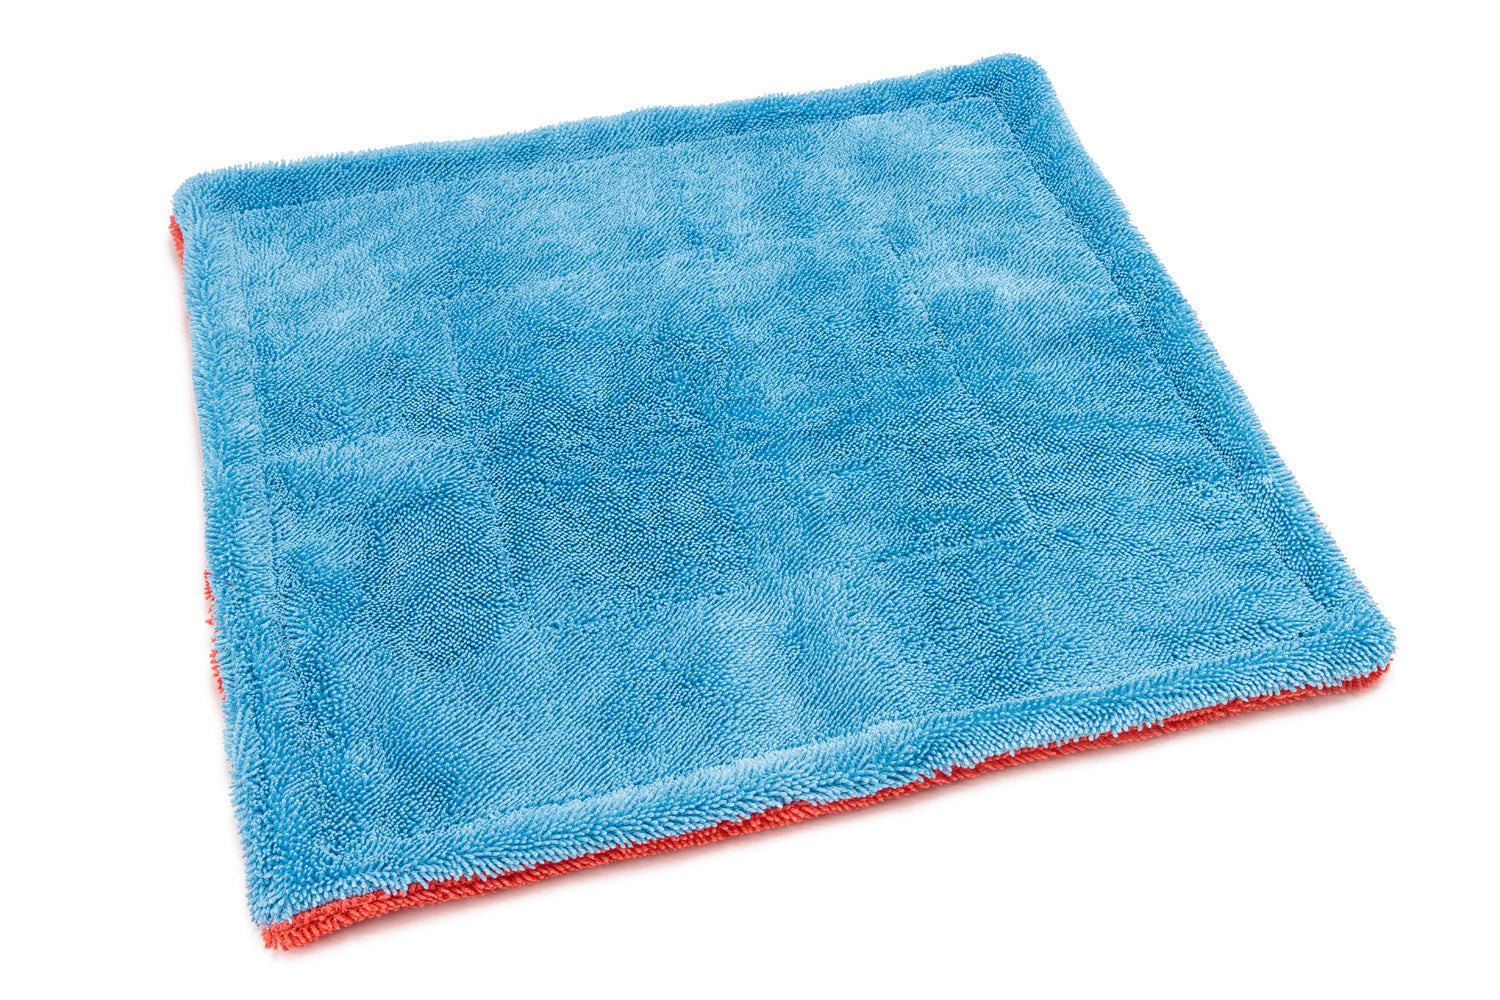 Autofiber Towel Dreadnought MAX Jr. - Triple Layer Microfiber Twist Pile Drying Towel (16 in. x 16 in., 1400gsm) - 2 pack